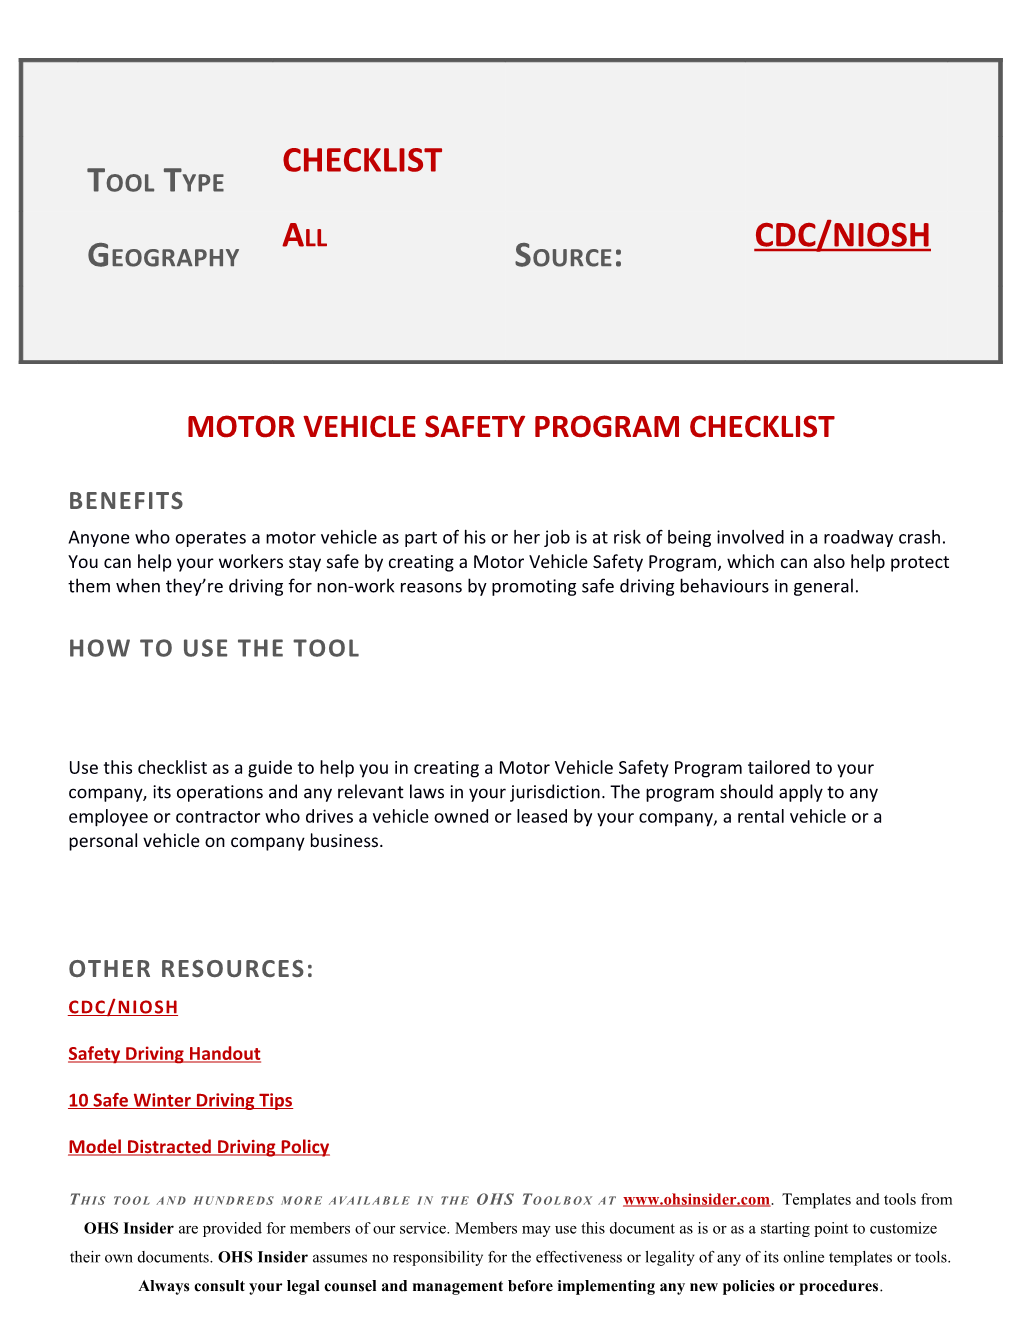 Motor Vehicle Safety Program Checklist